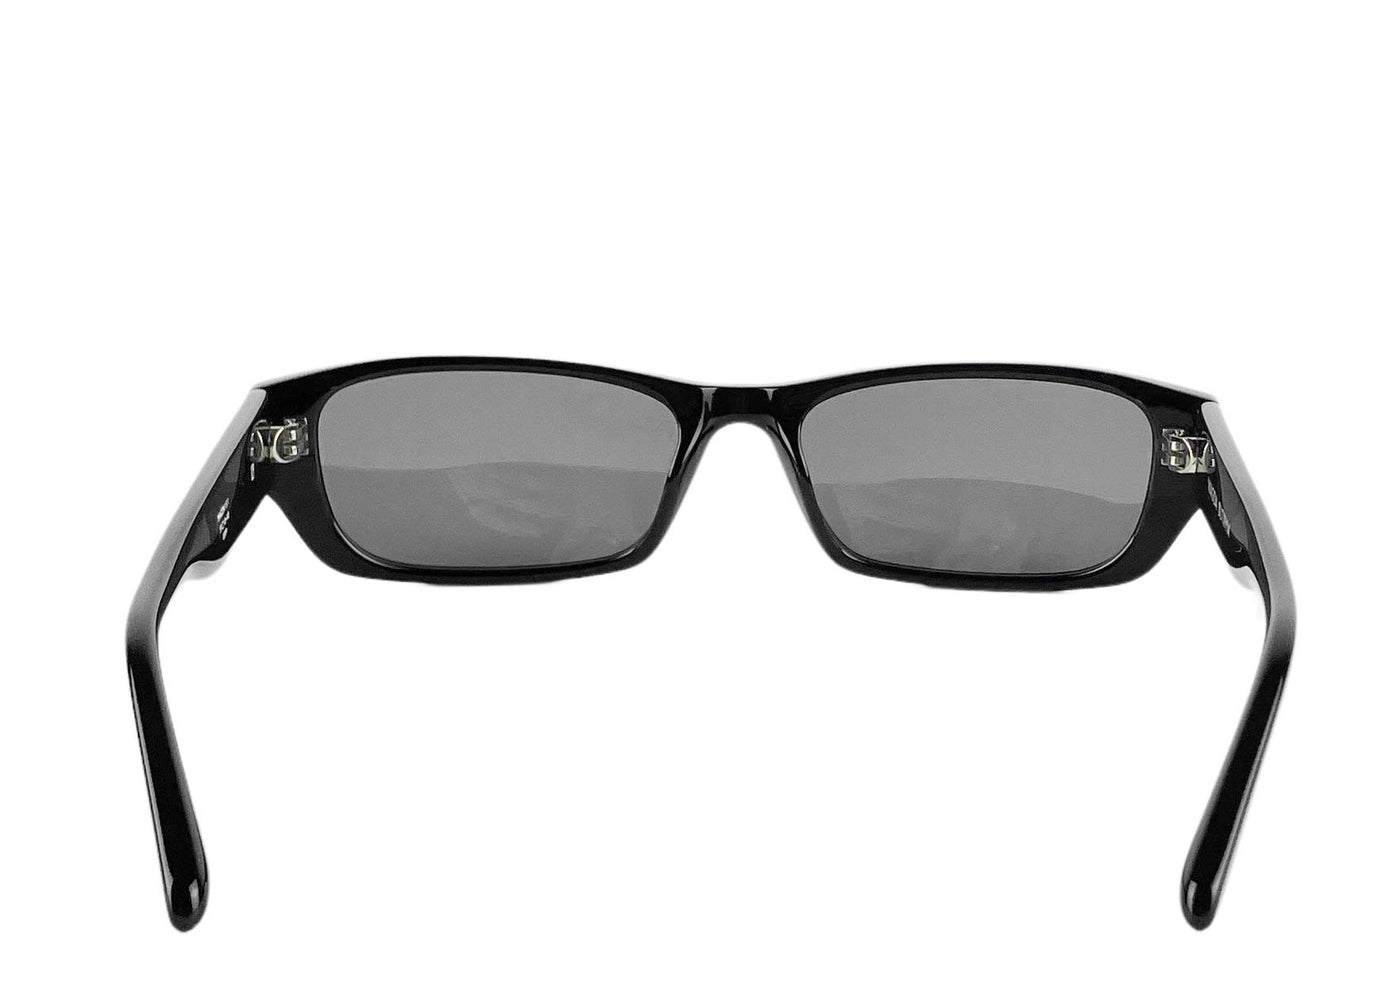 Linda Farrow x Magda Butrym Rectangular Sunglasses in Black - Discounts on Linda Farrow at UAL